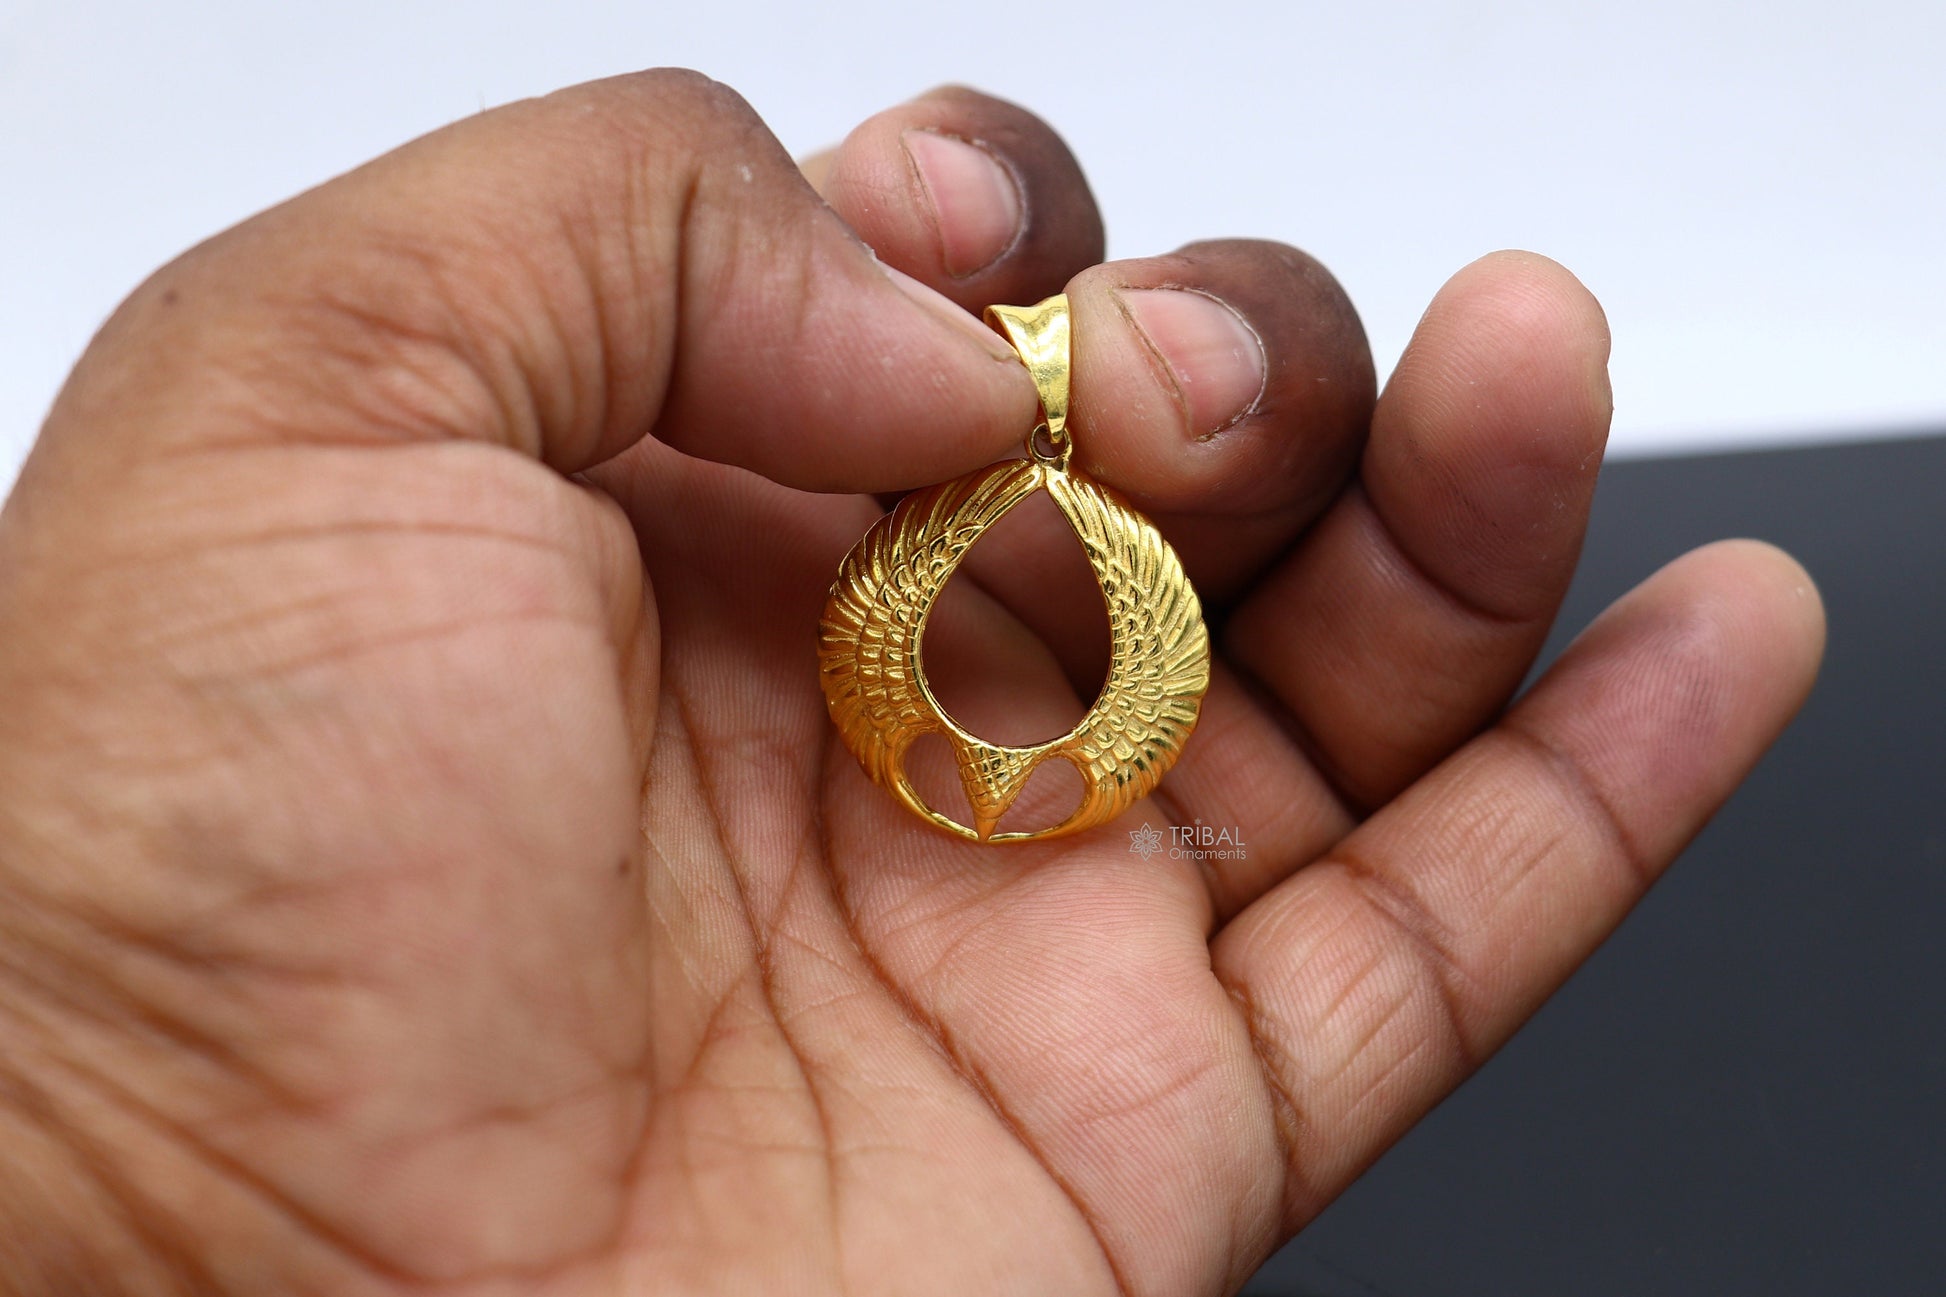 925 sterling silver Hindu idol Lord Vishnu vahan Garuda eagle pendant, excellent gold polished locket pendant customized jewelry nsp601 - TRIBAL ORNAMENTS